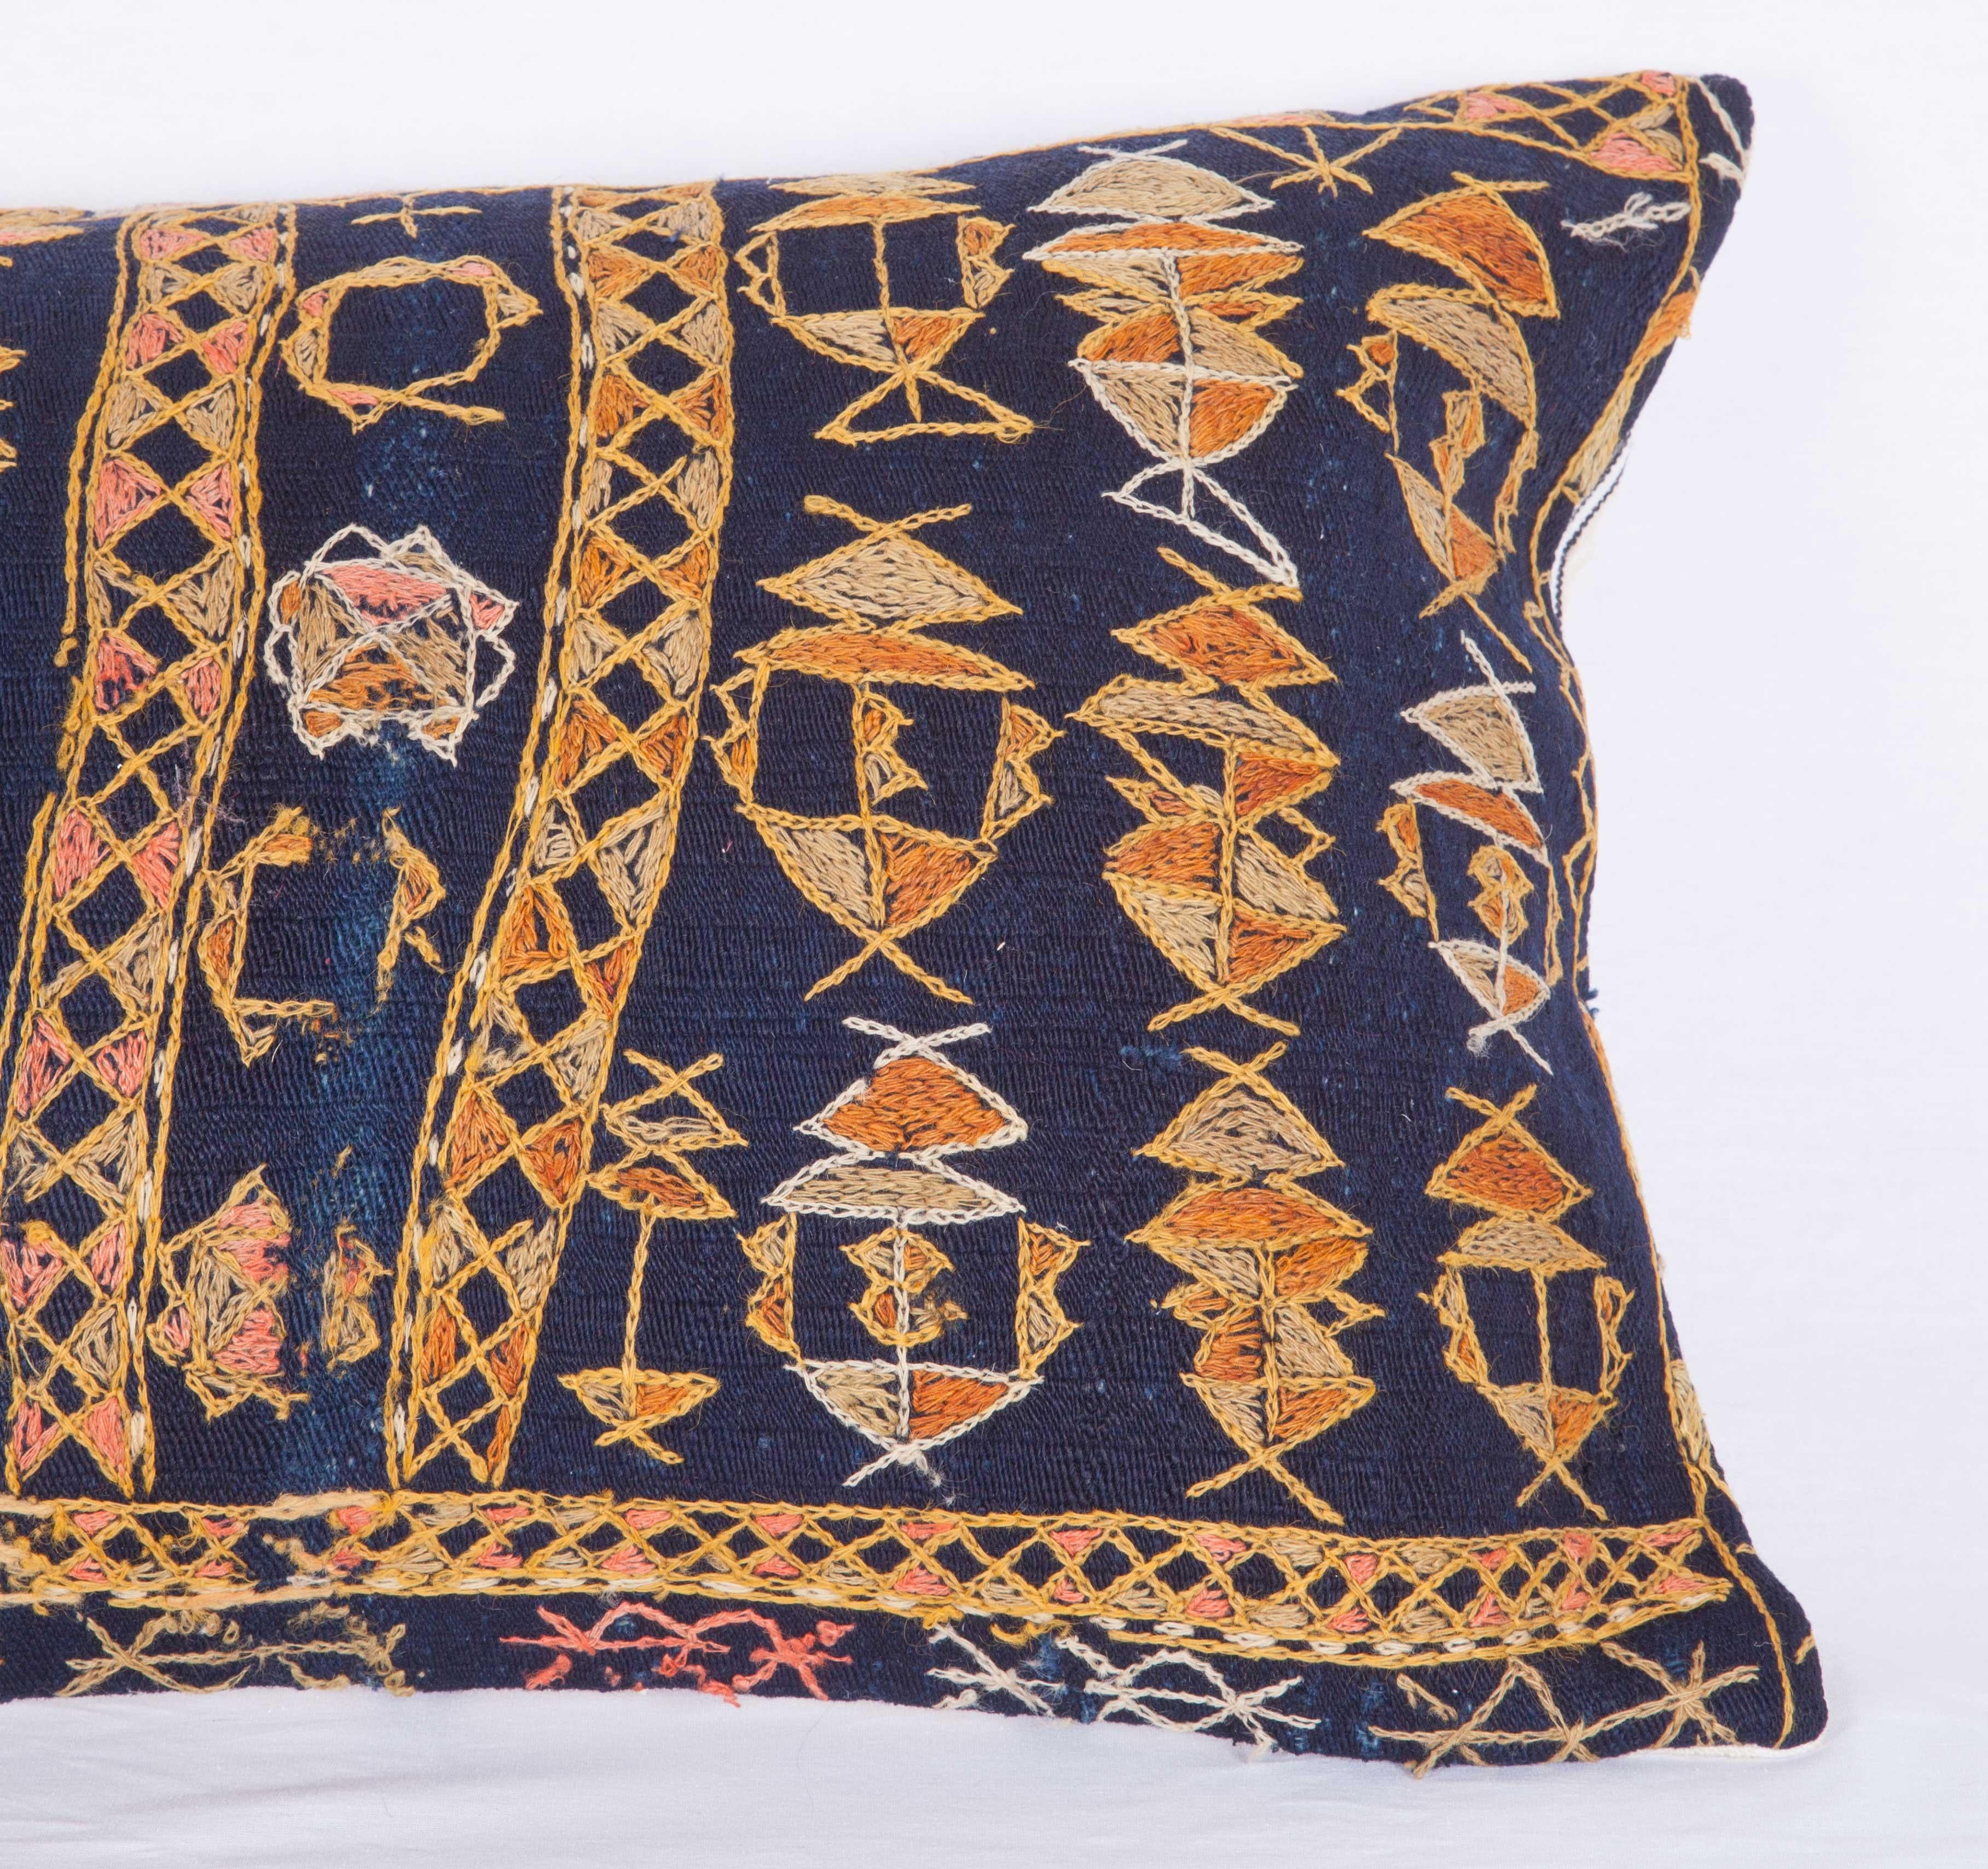 Turkish Pillow Case Fashioned from an Early 20th Century Kurdish Djidjim